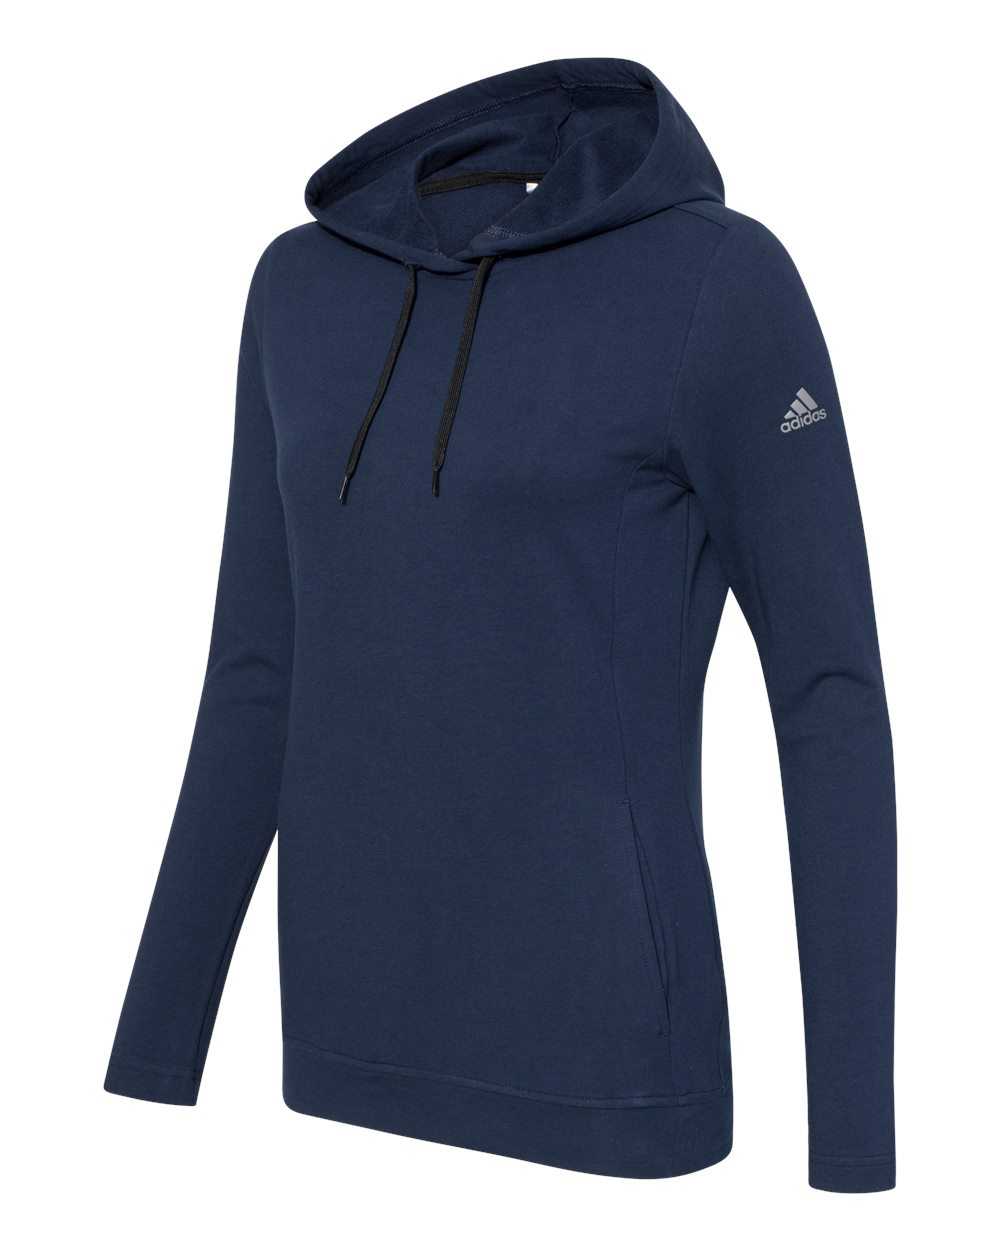 Adidas A451 Women's Lightweight Hooded Sweatshirt - Collegiate Navy - HIT a Double